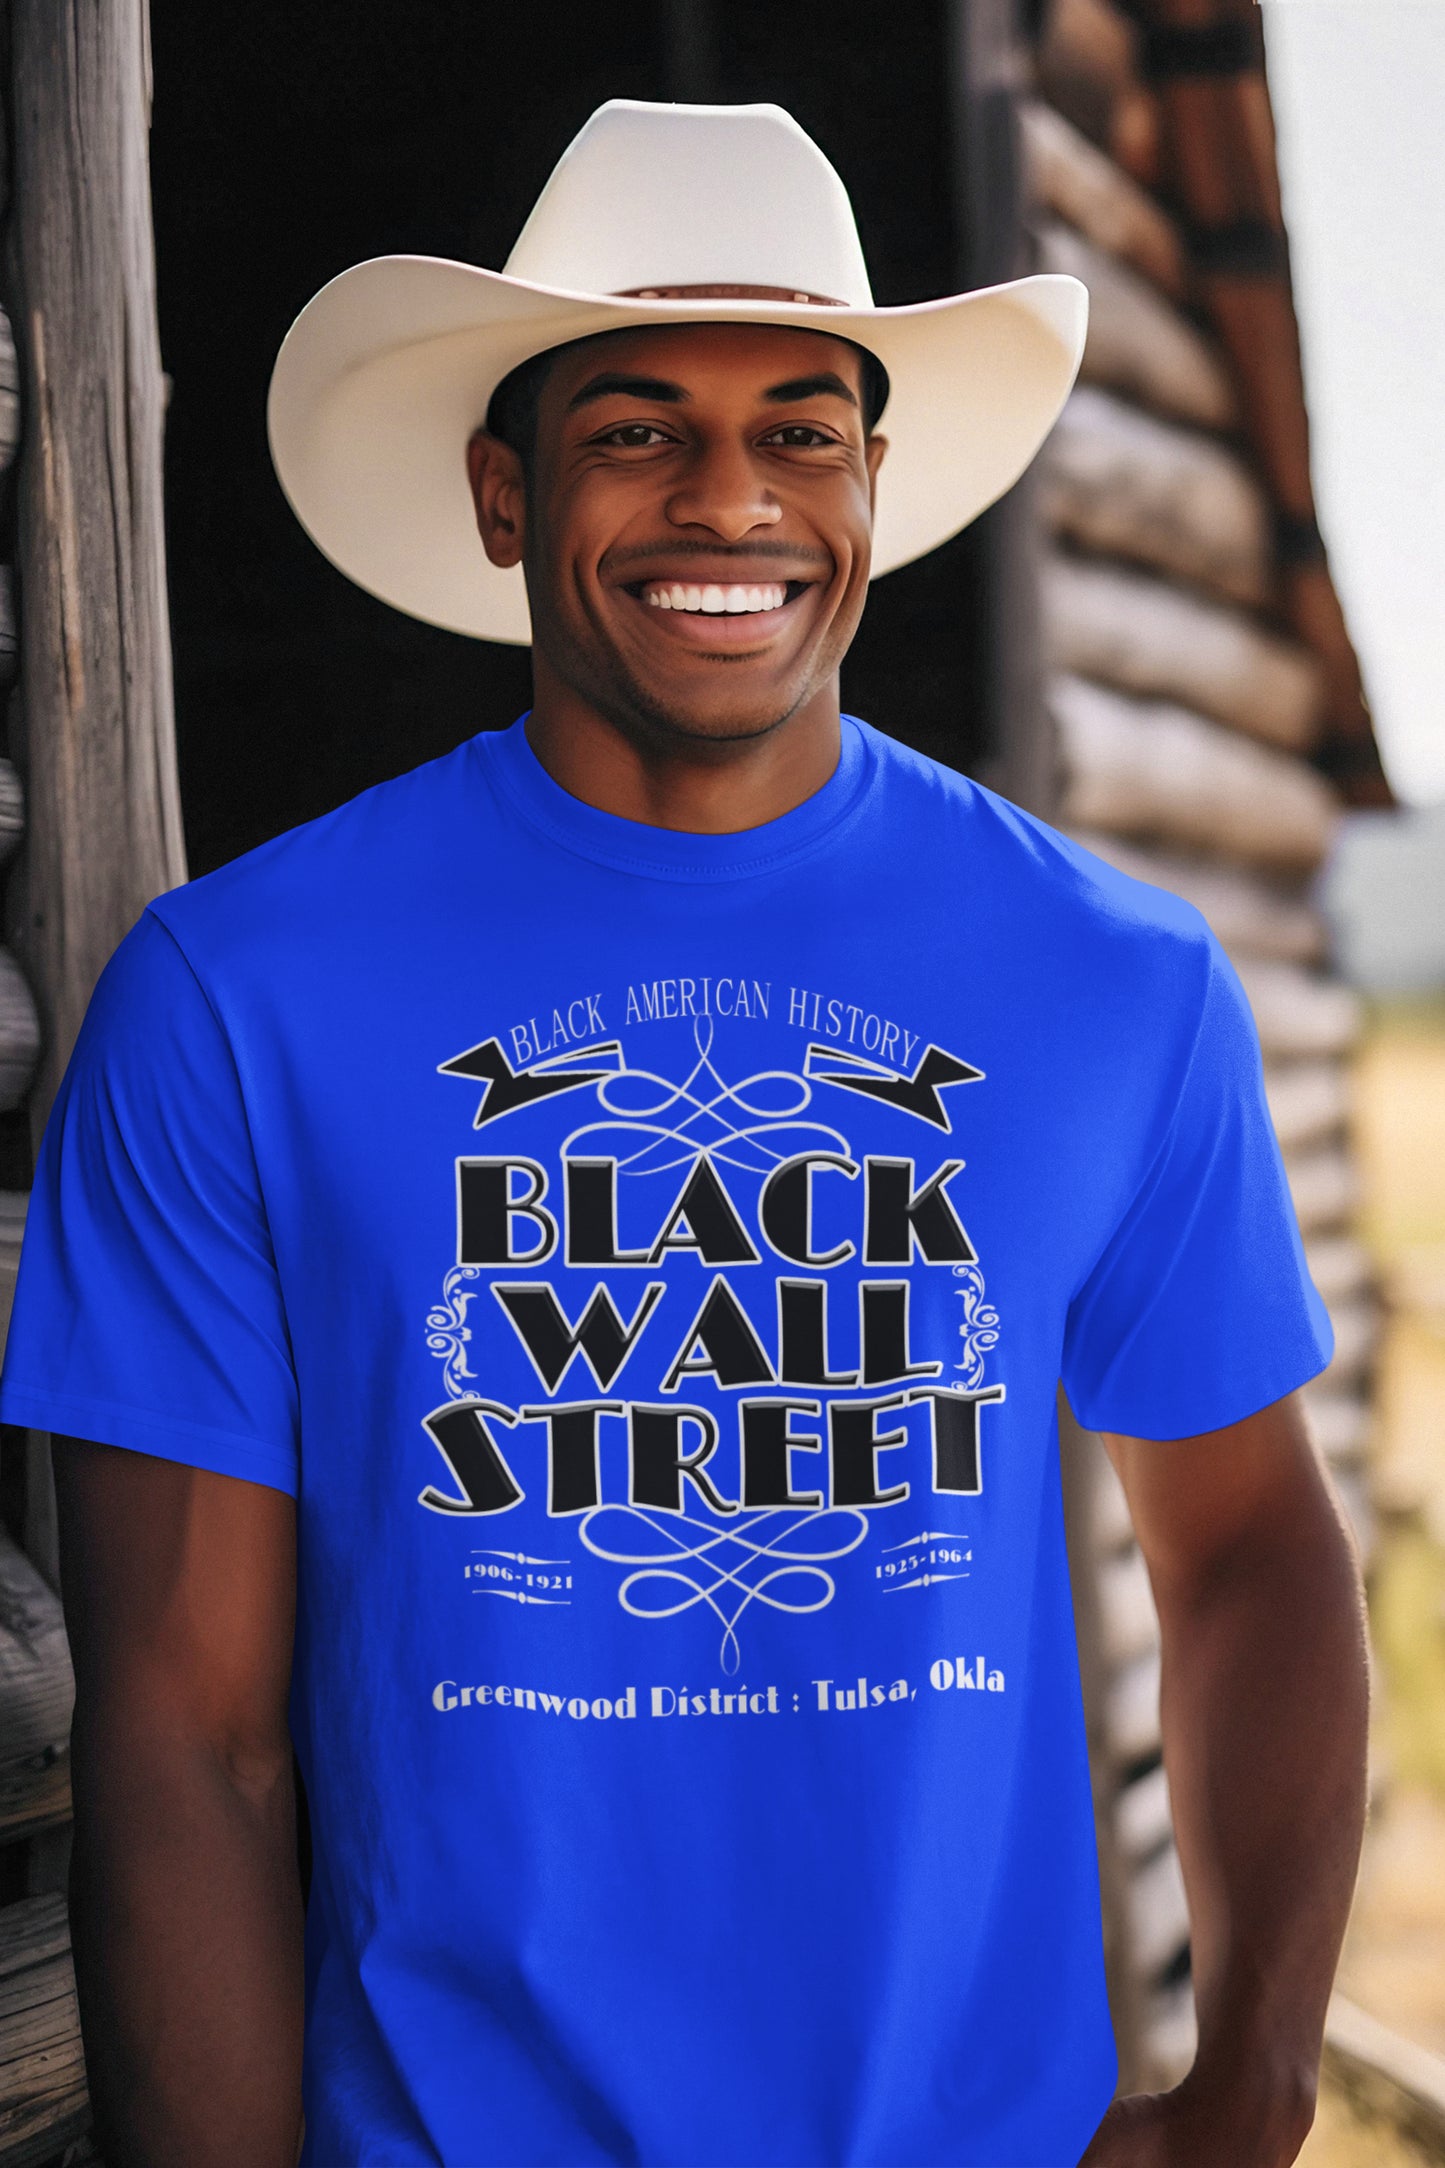 Black History "Greenwood District" t-shirt